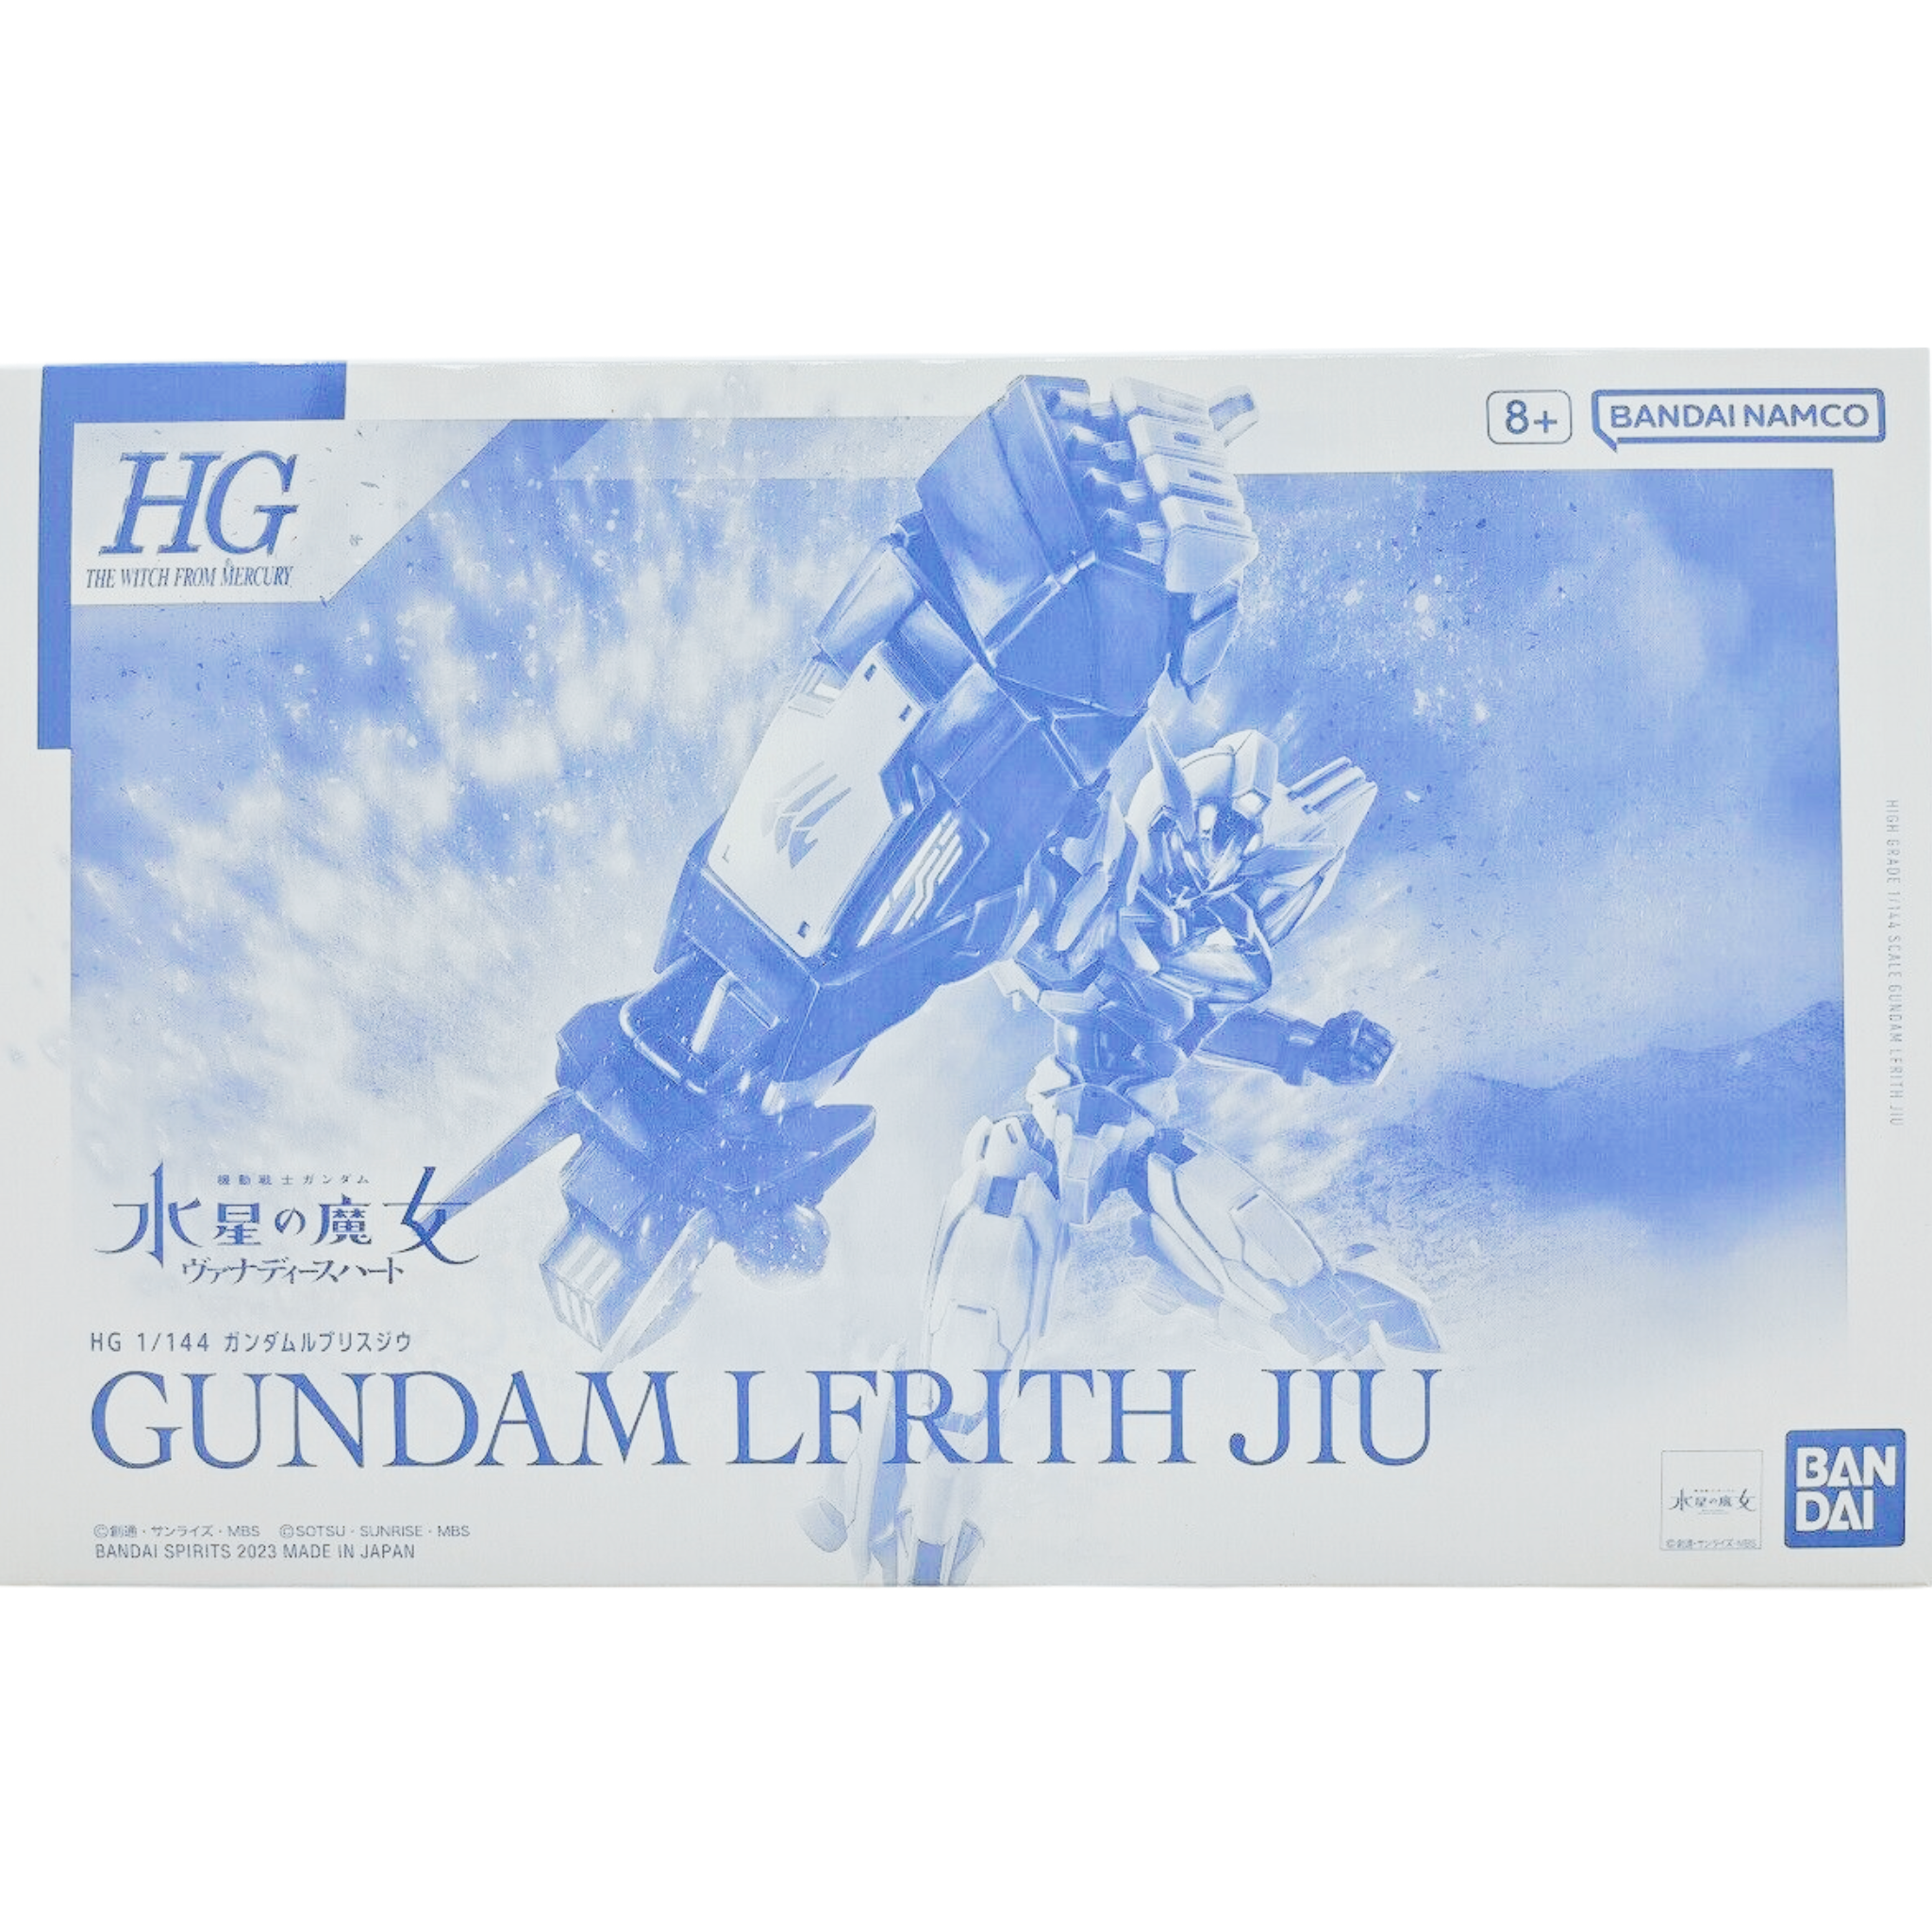 HG 1/144 The Witch From Mercury Gundam Lfrith Jiu #5065598 by Bandai